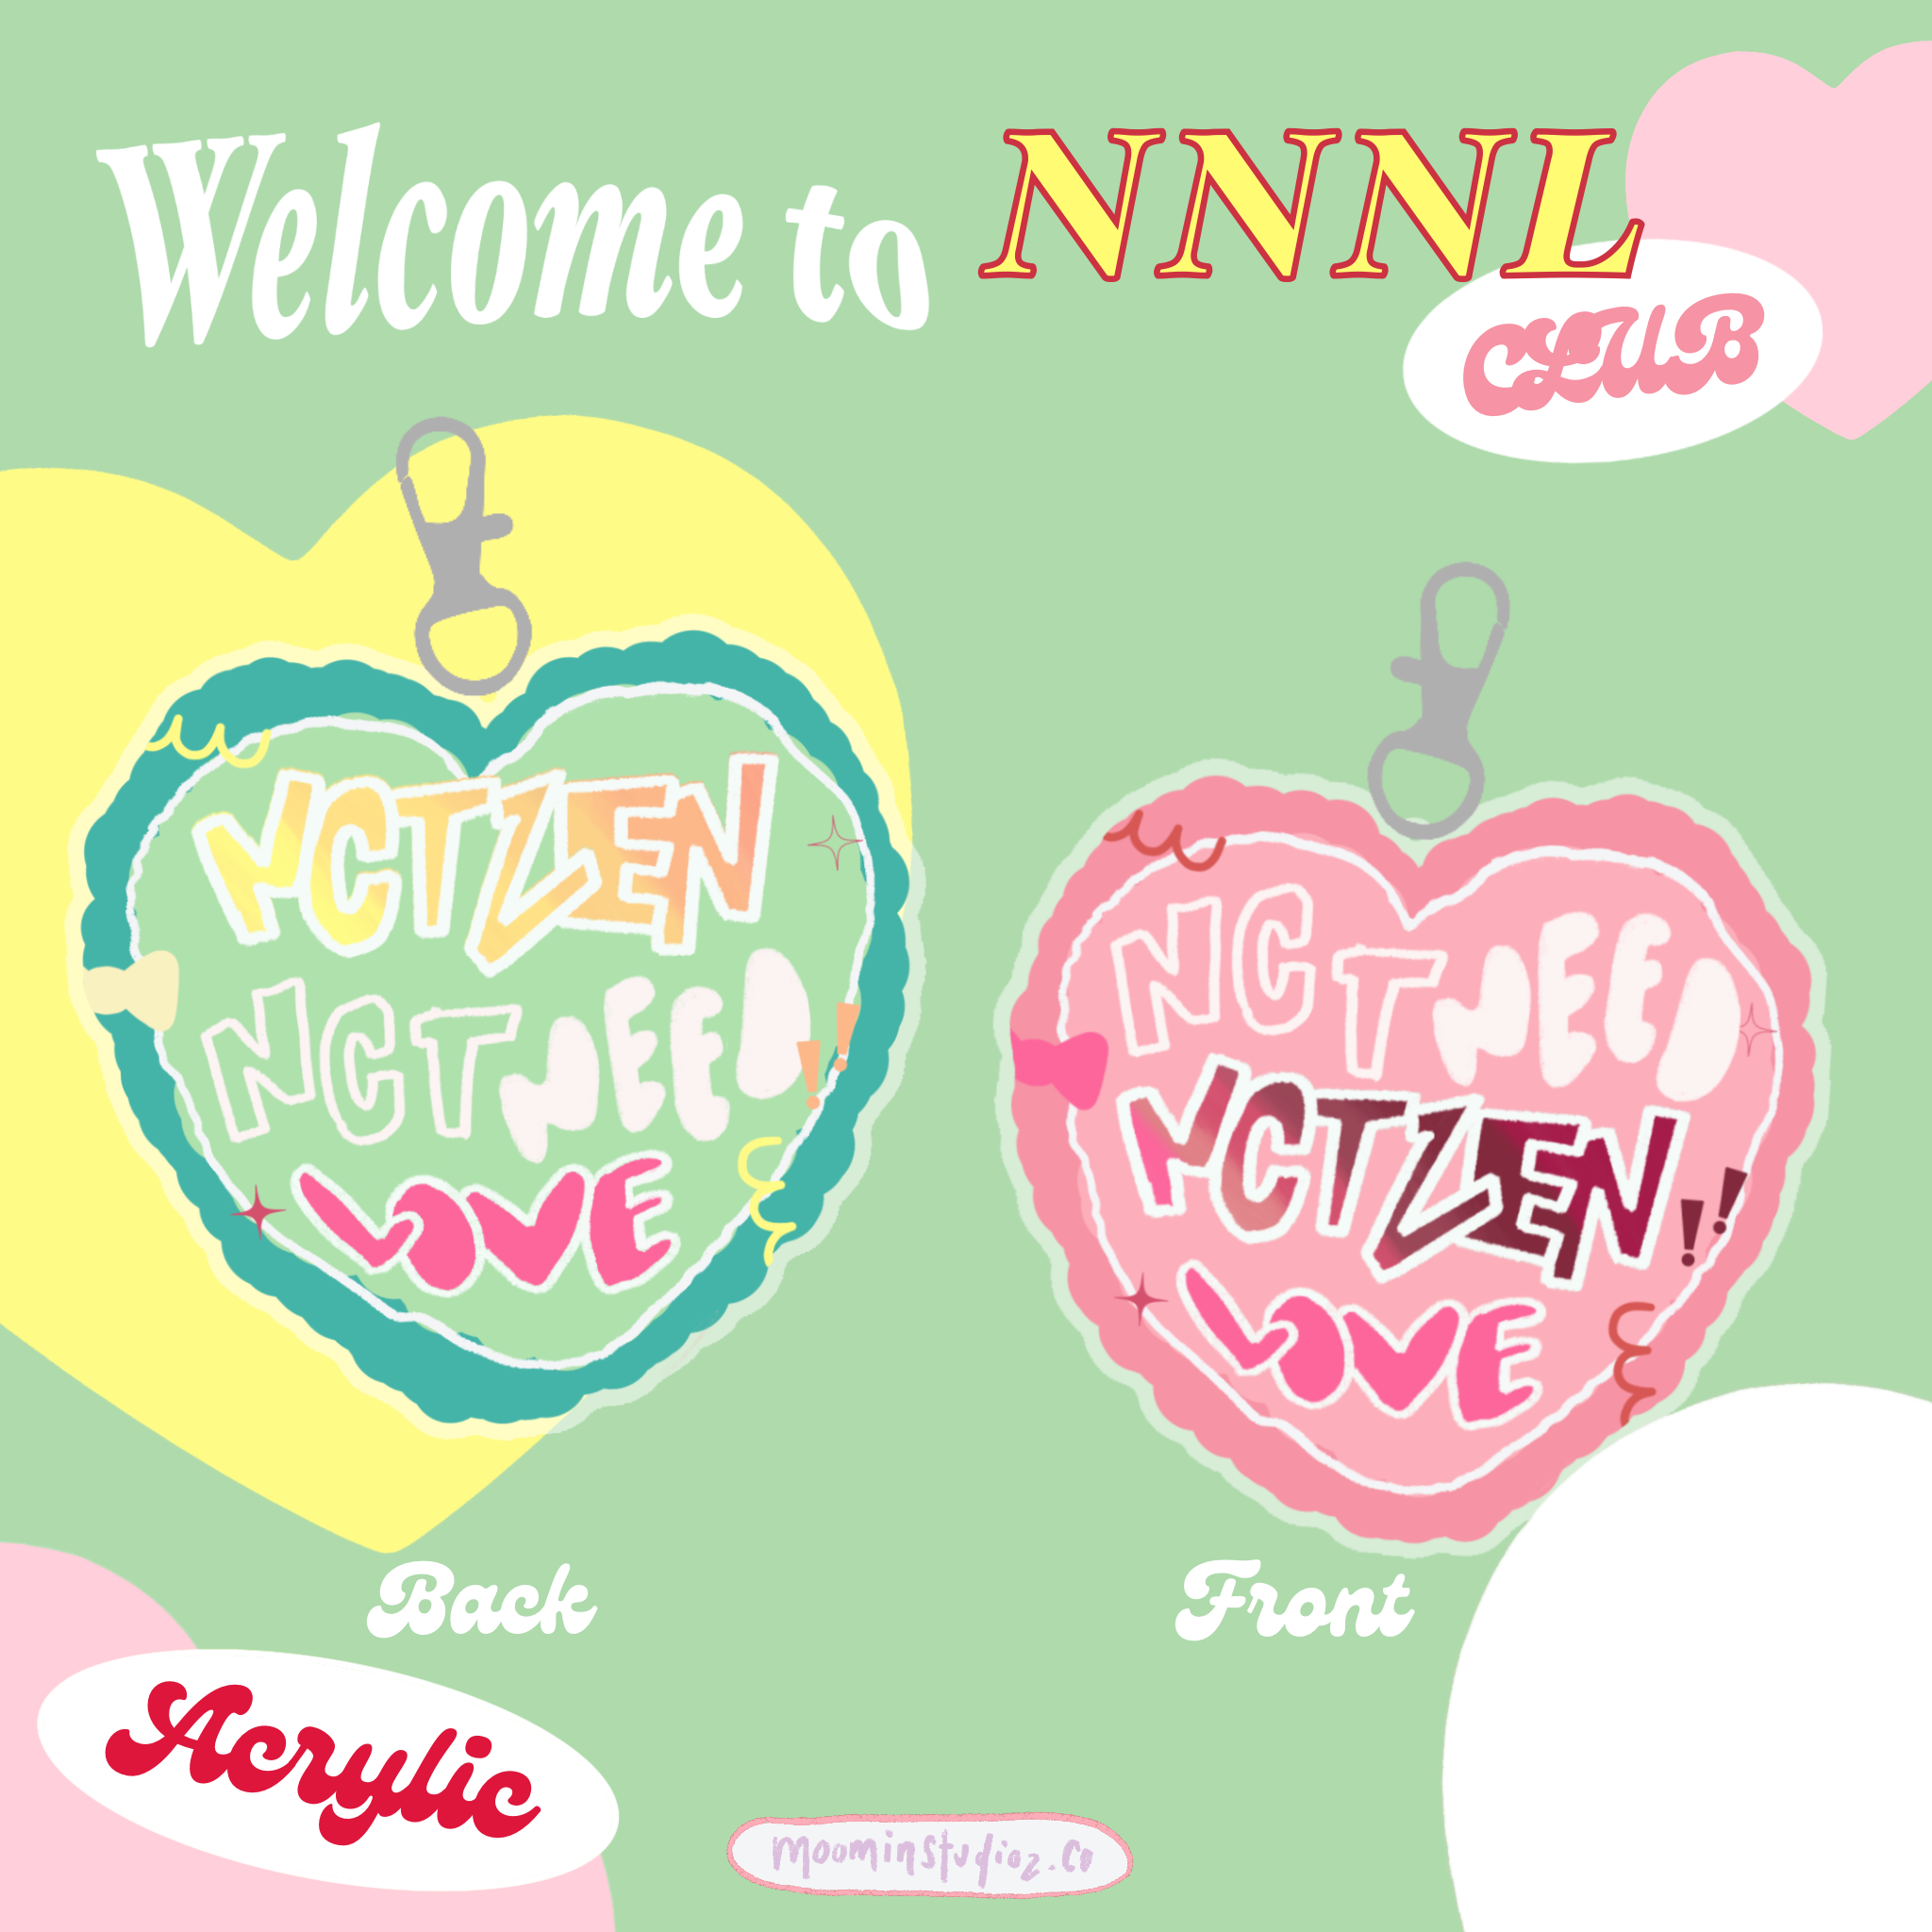 NCT NNNL CLUB ACRYLIC KEYCHAIN